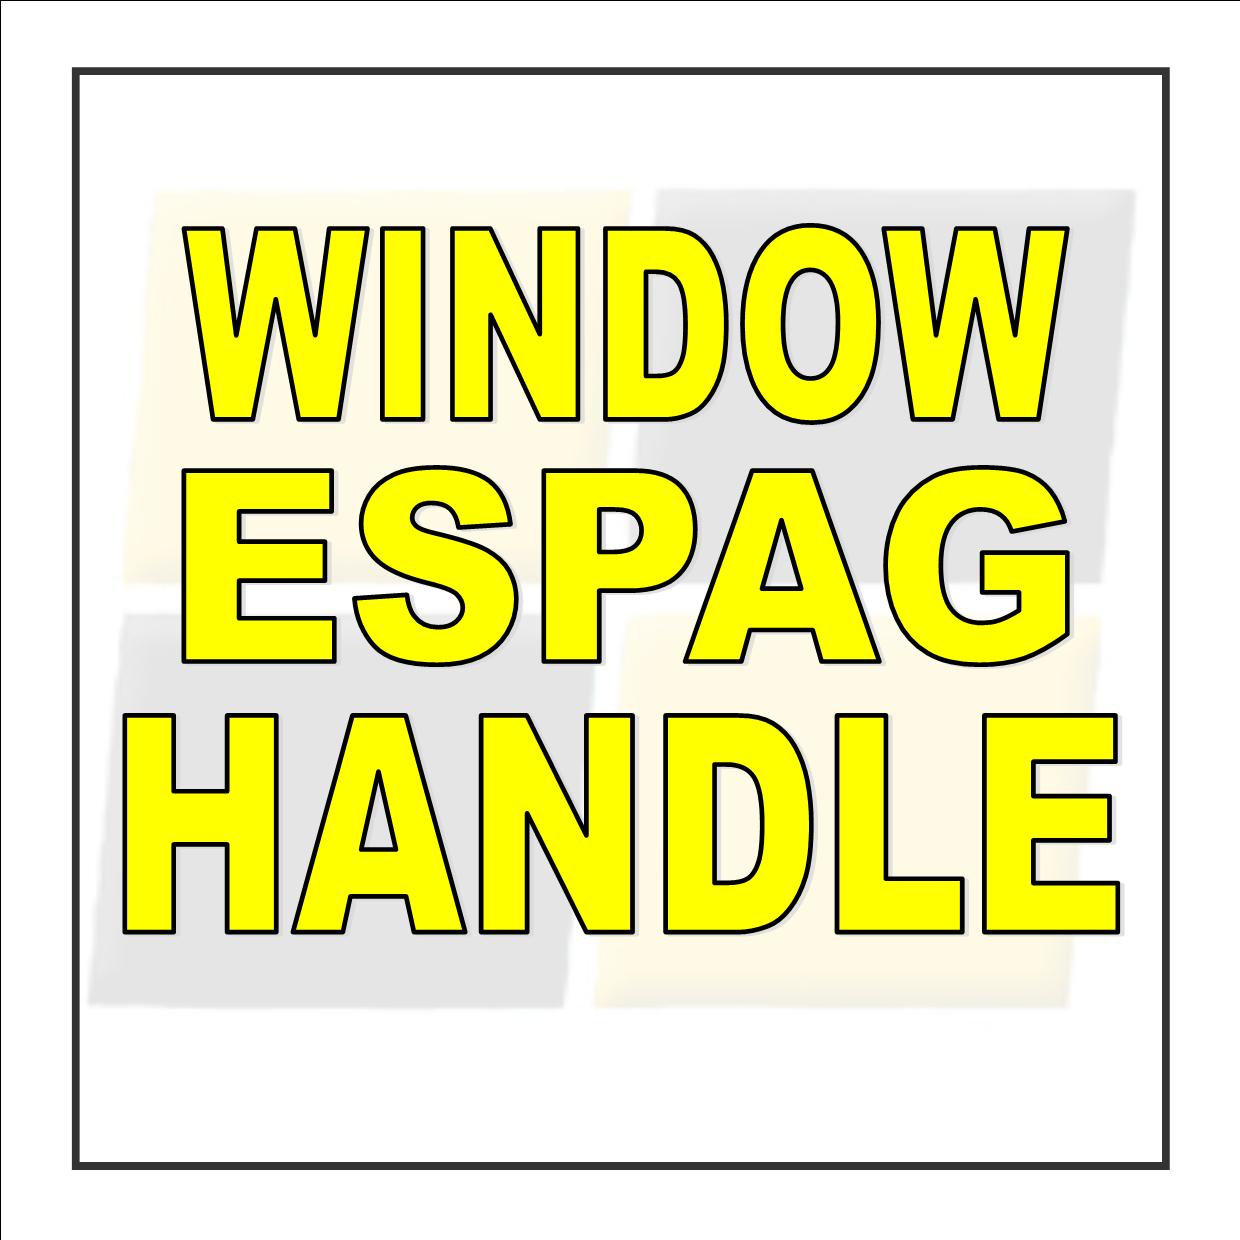 Window Espag Handle